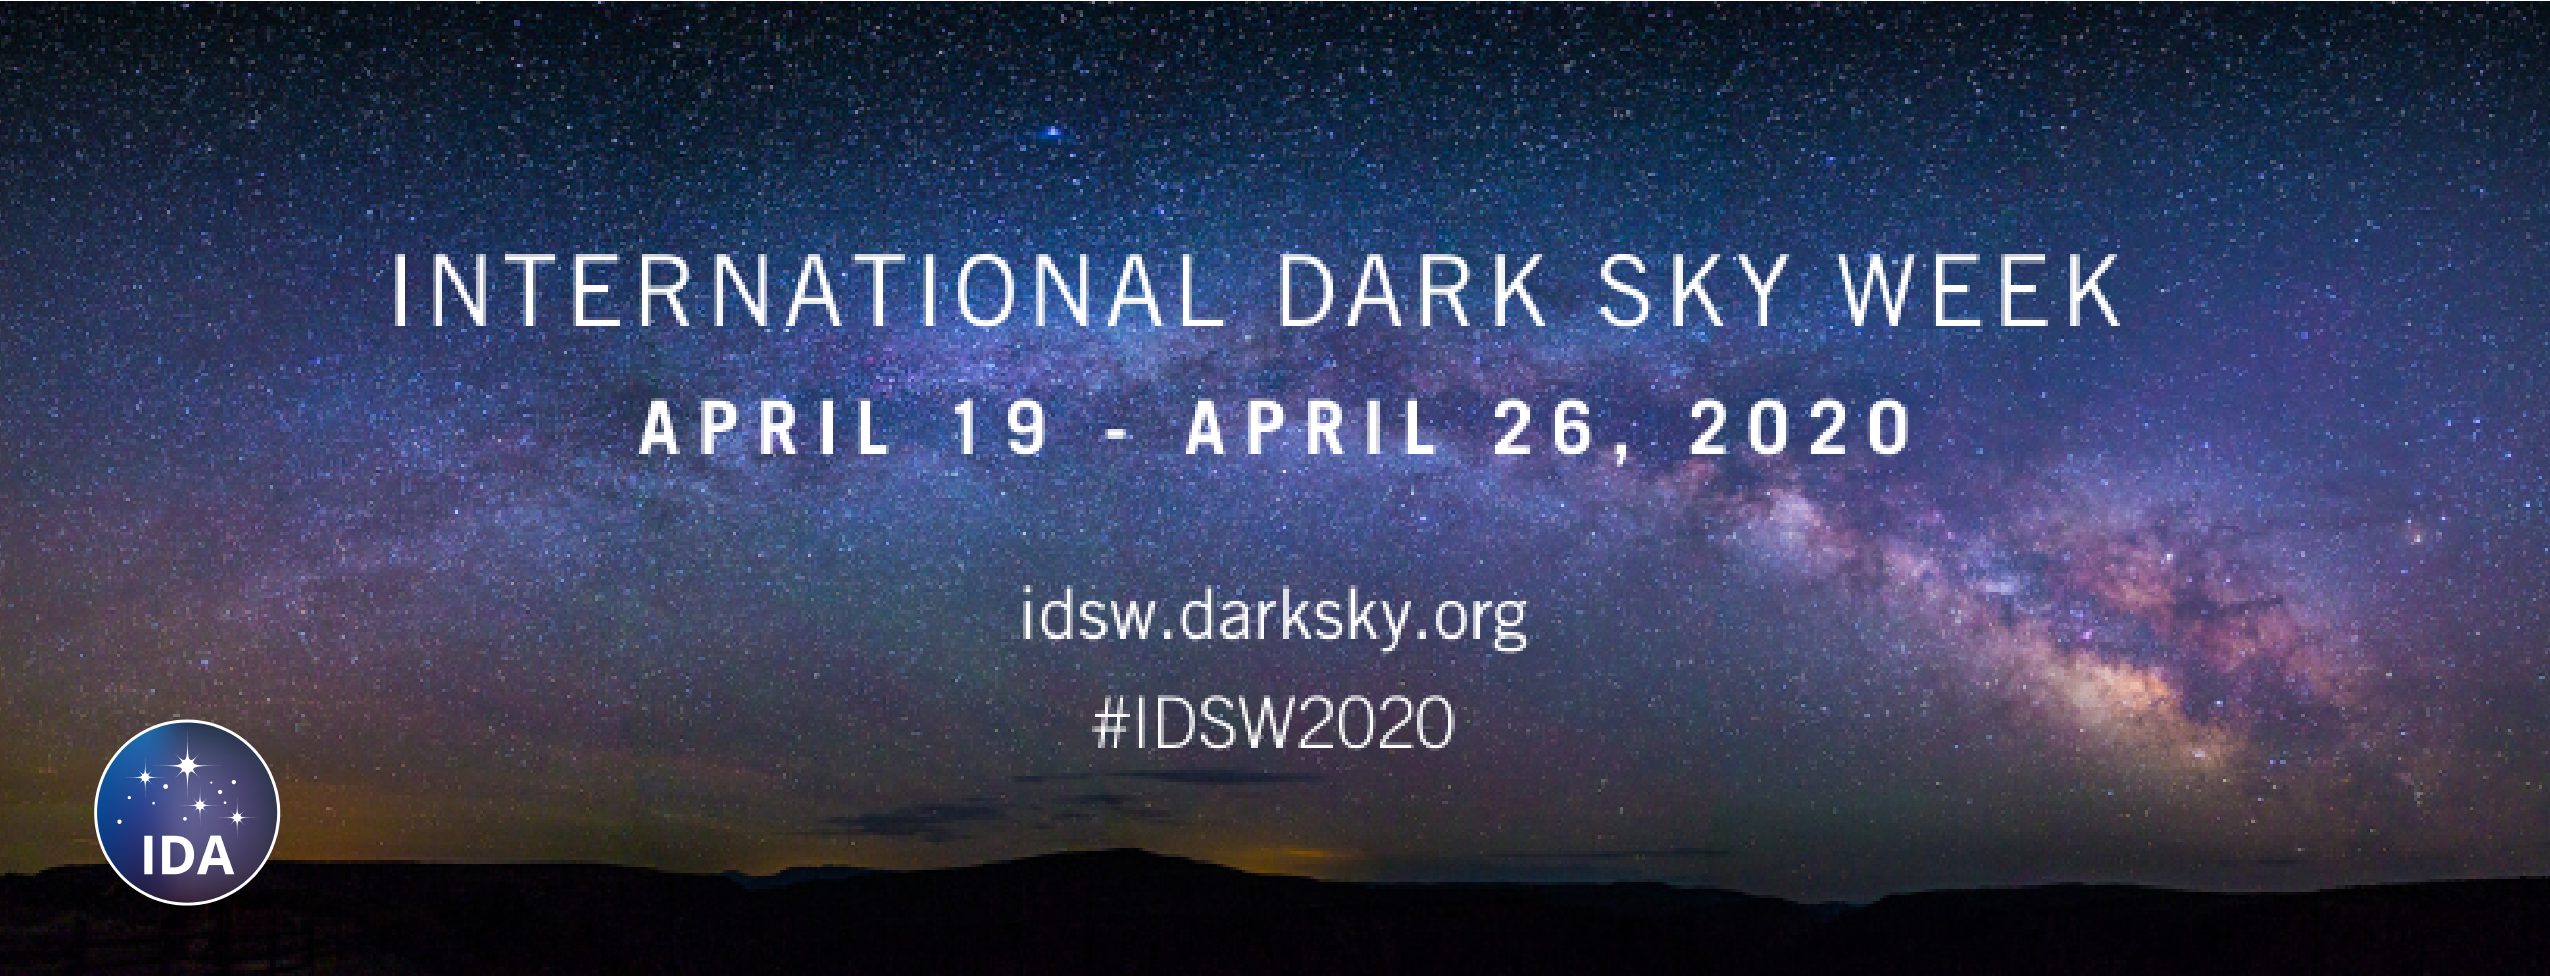 April’s International Dark Sky Week Urges Homebound Families to “Look Up Together” Image